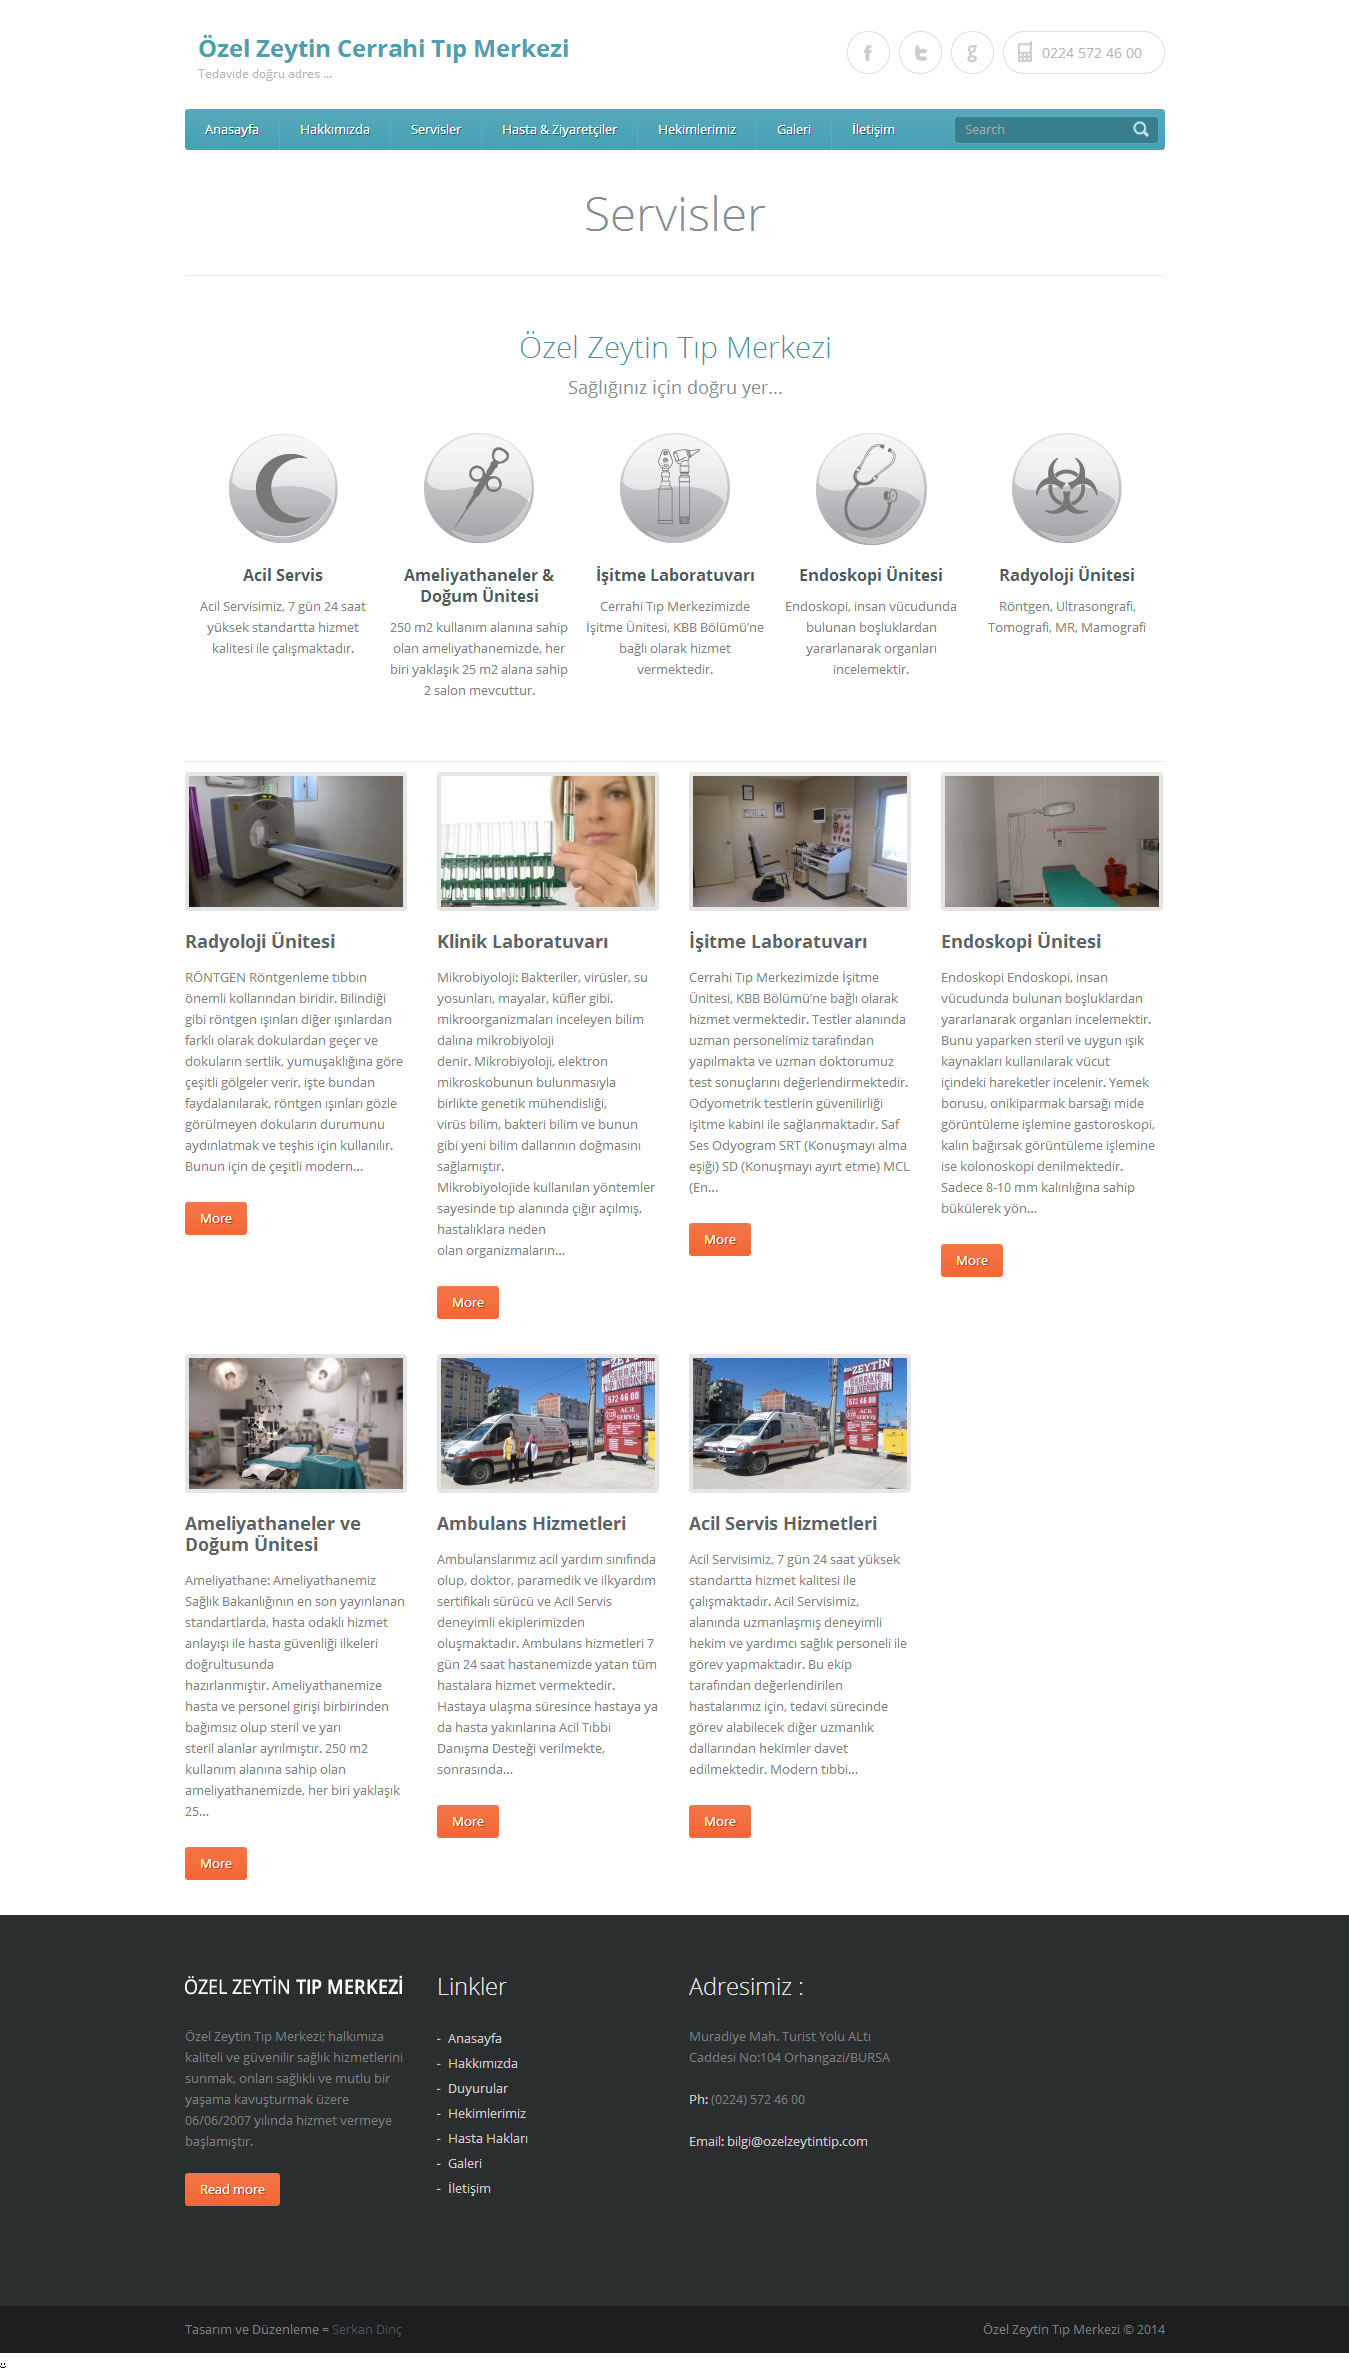 Özel Zeytin Tıp Merkezi Web Sitesi